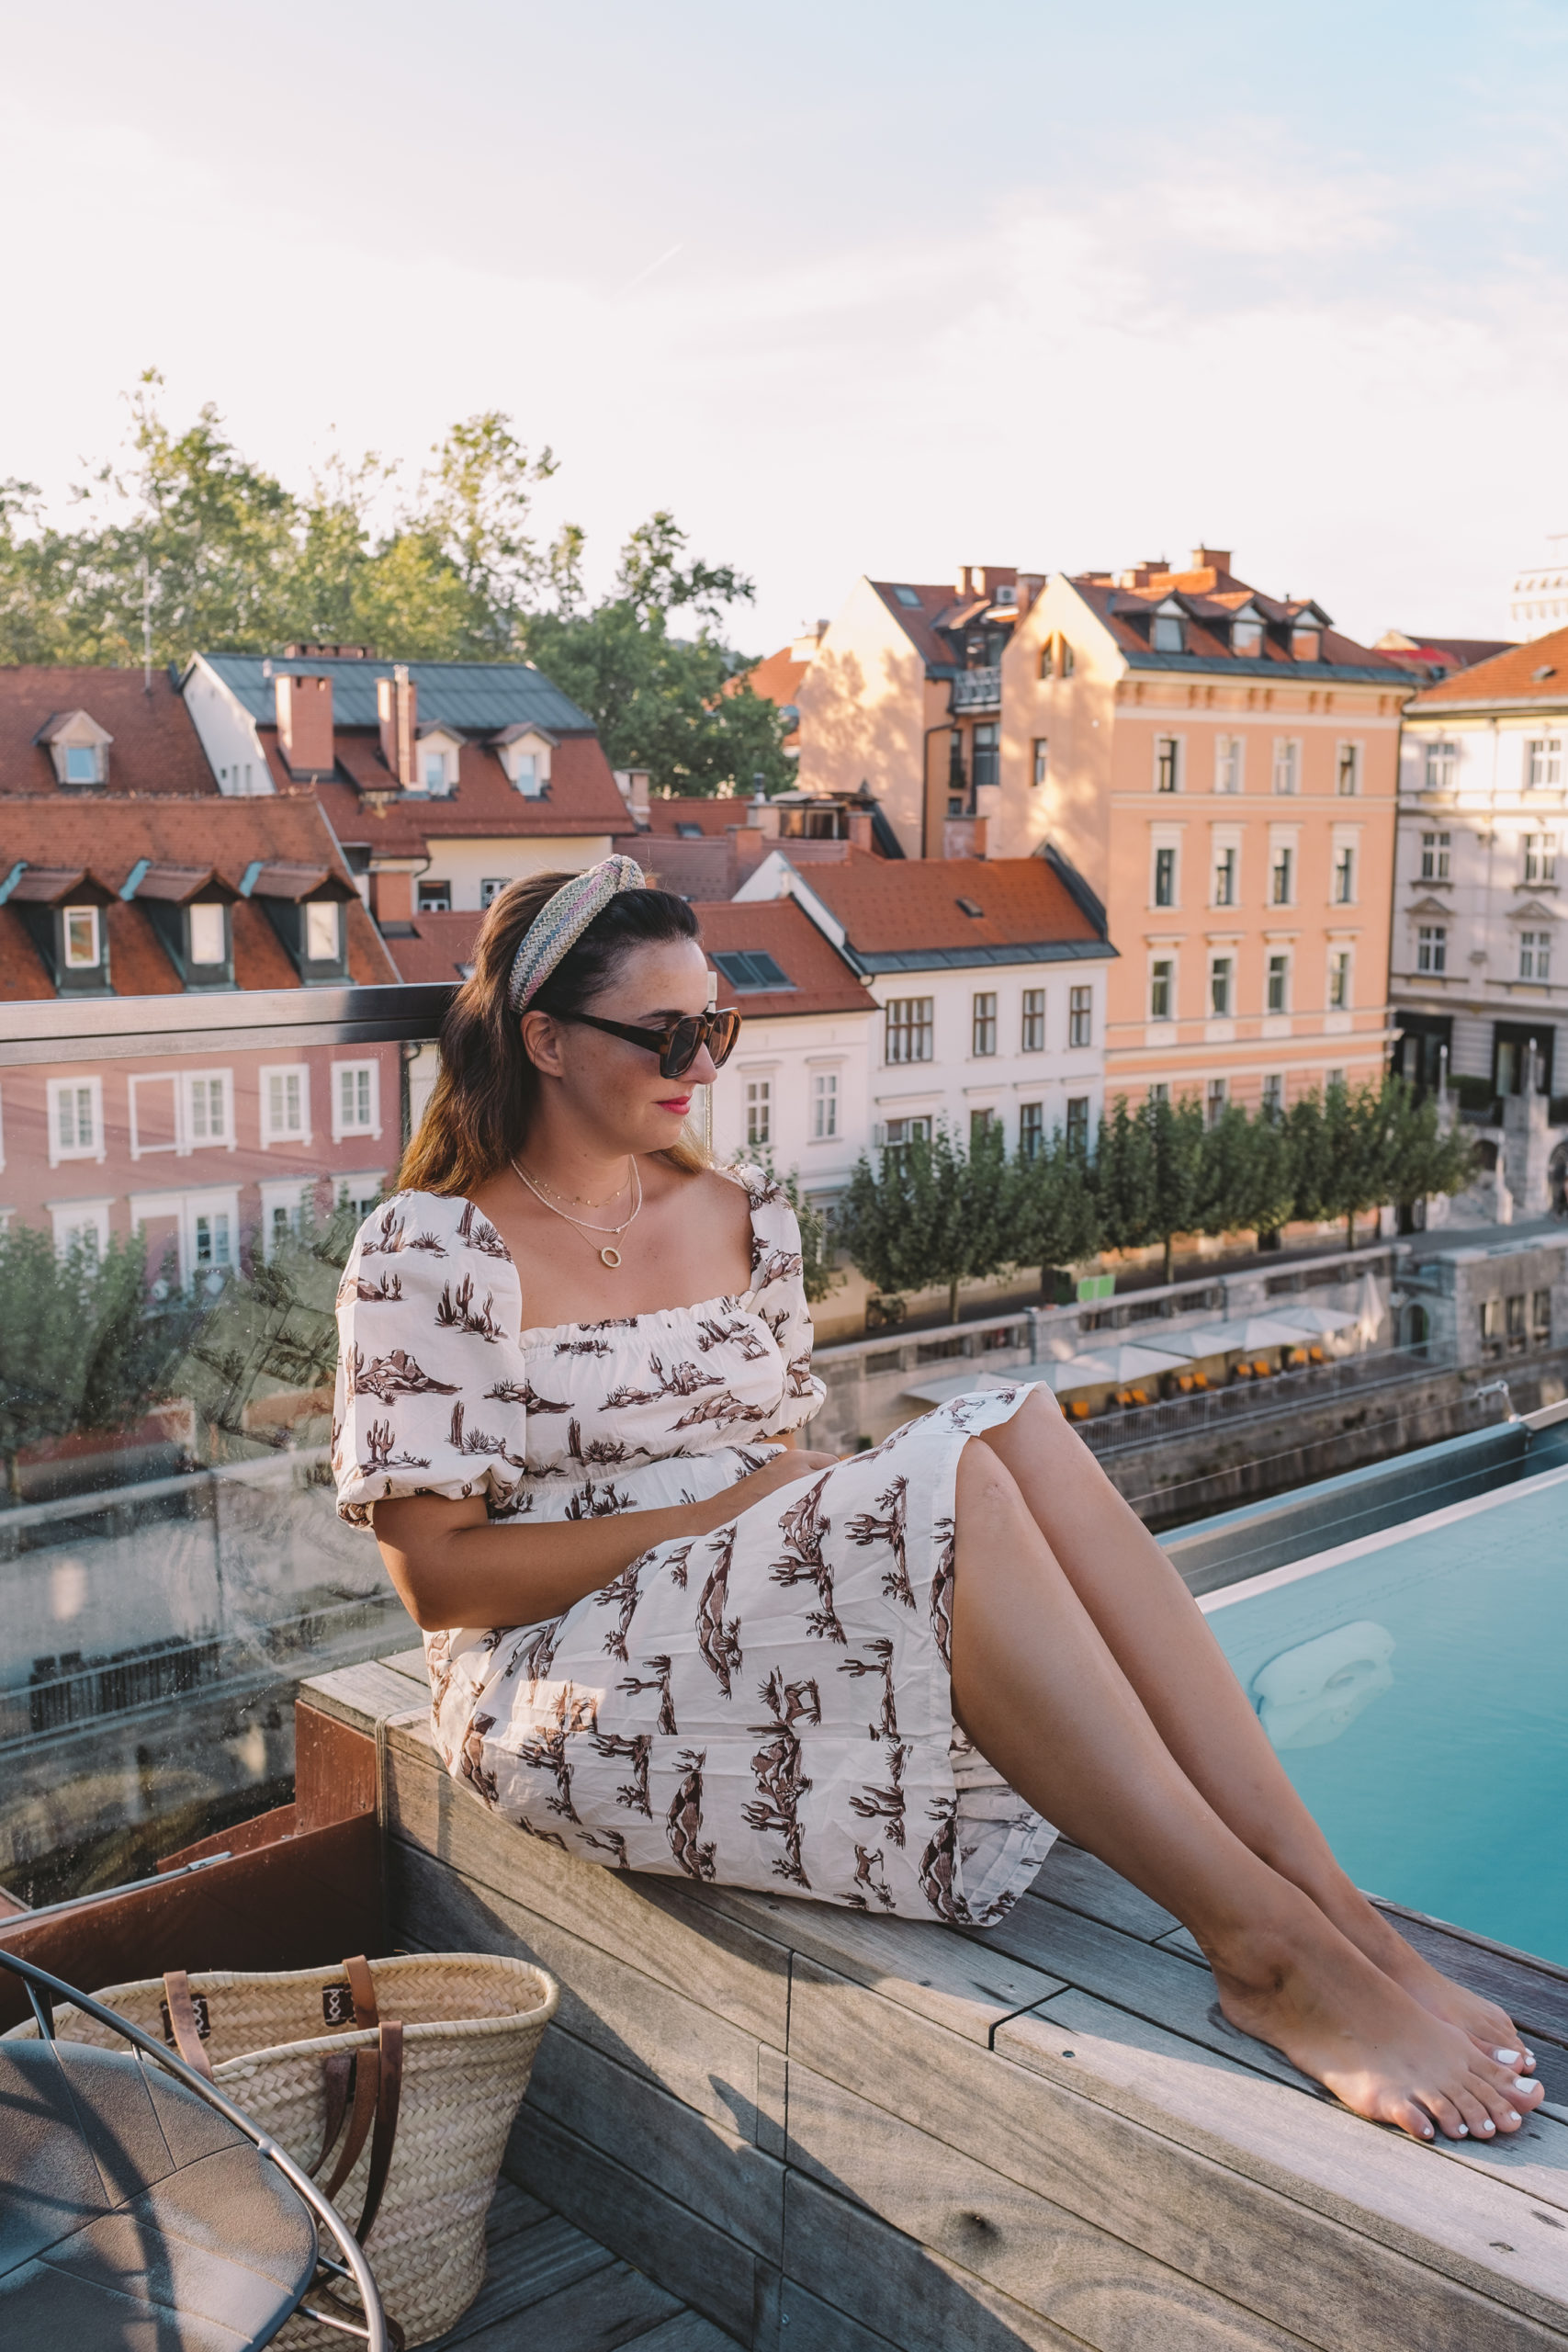 Ljubljana Slovenia's charming capital